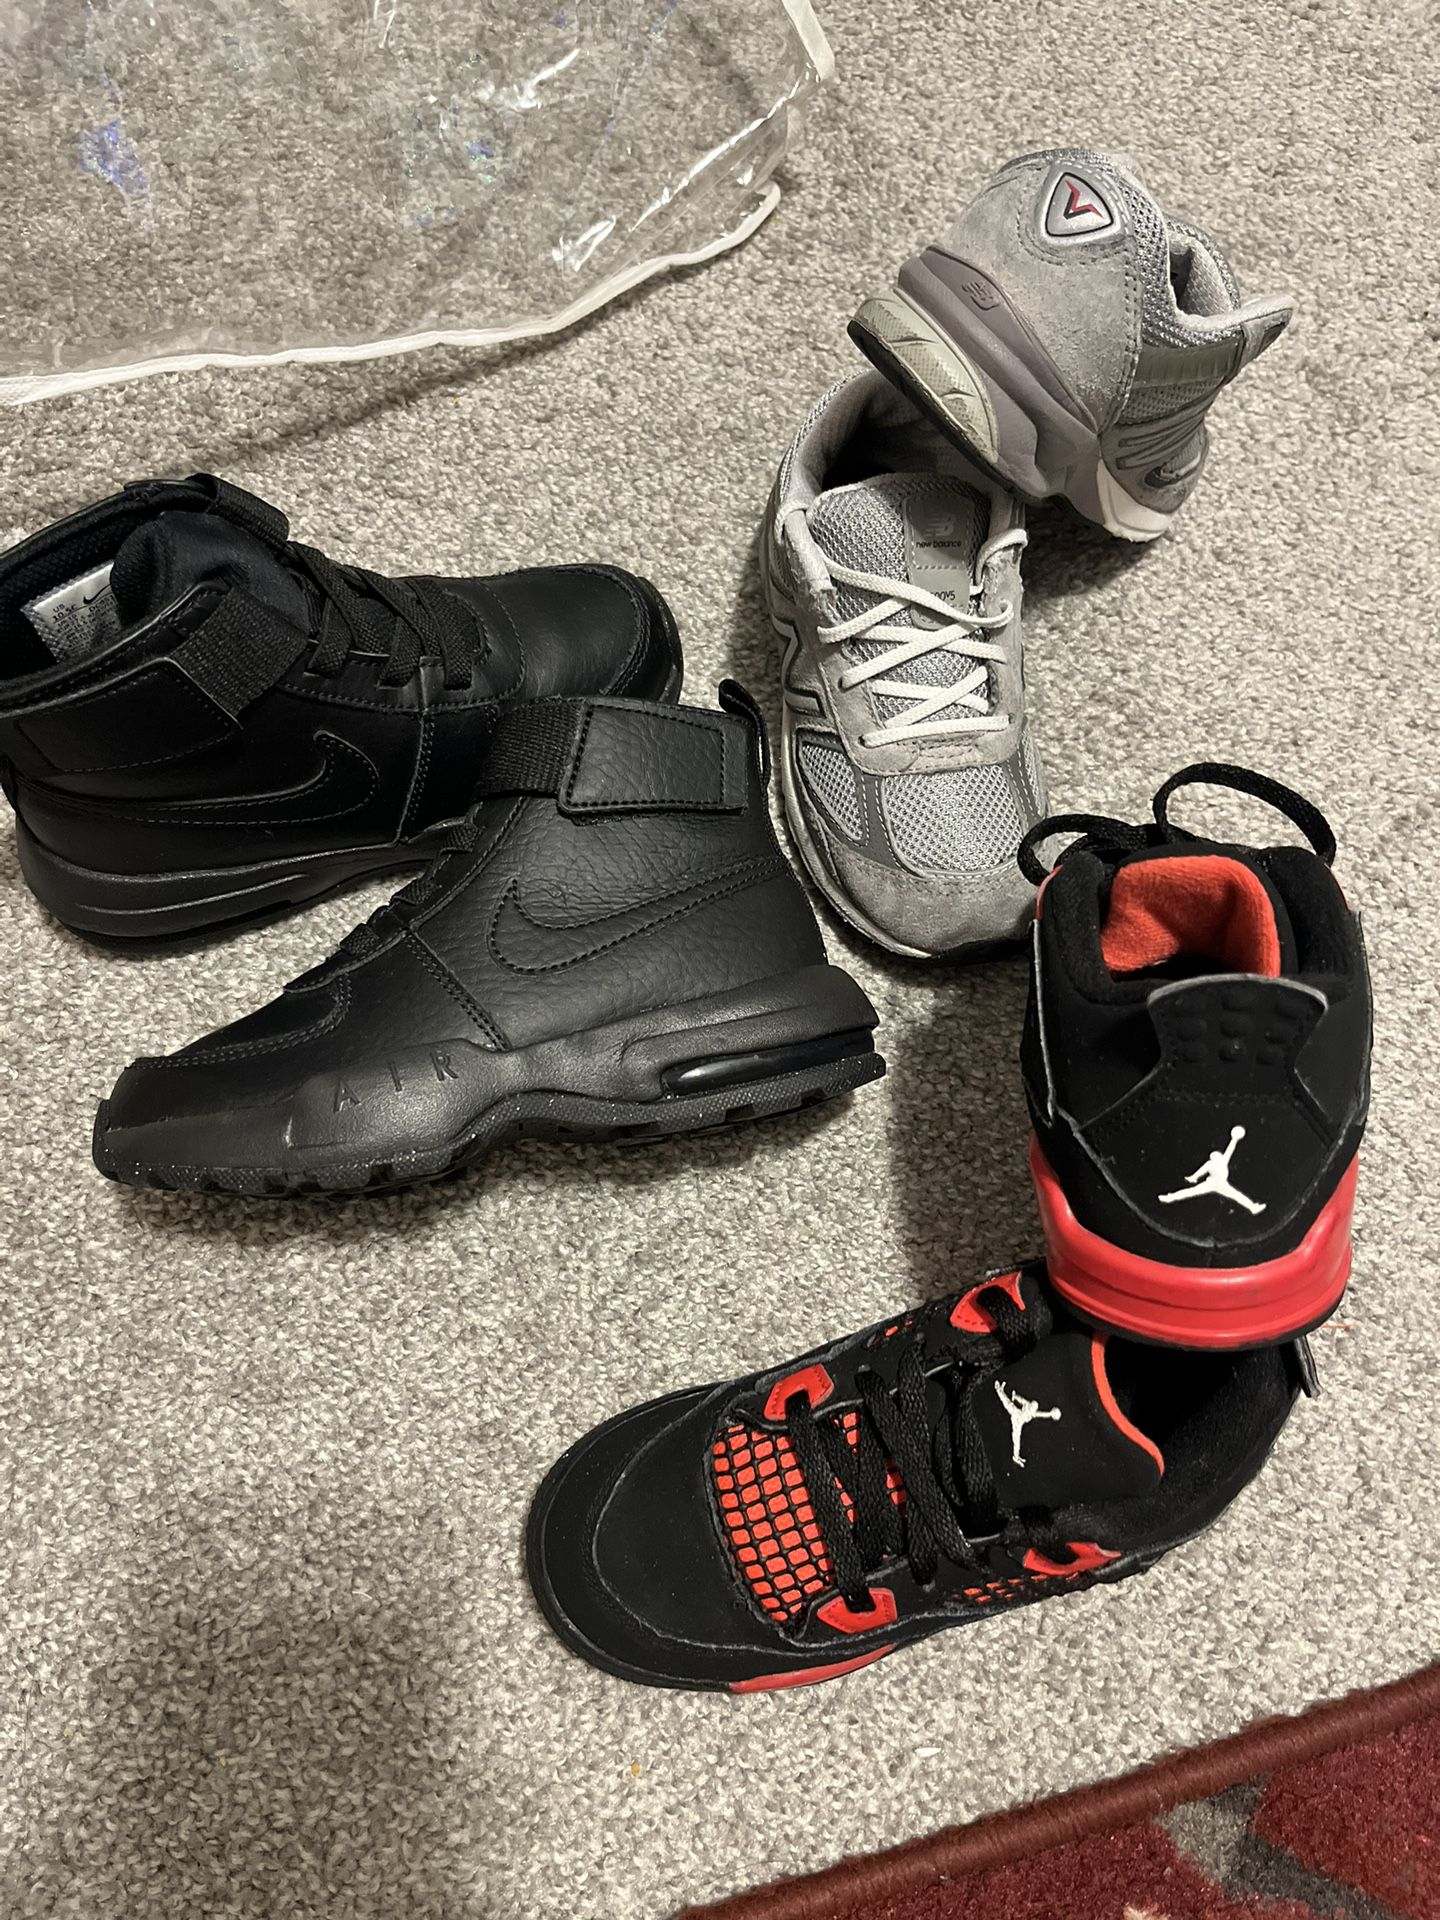 Nikes Boots New!! no box.. size 10.5 $70) Red & Black Jordan's size10 $65...Grey New Balance 990v5  size10 little kids $60 (All little Kids👇🏽